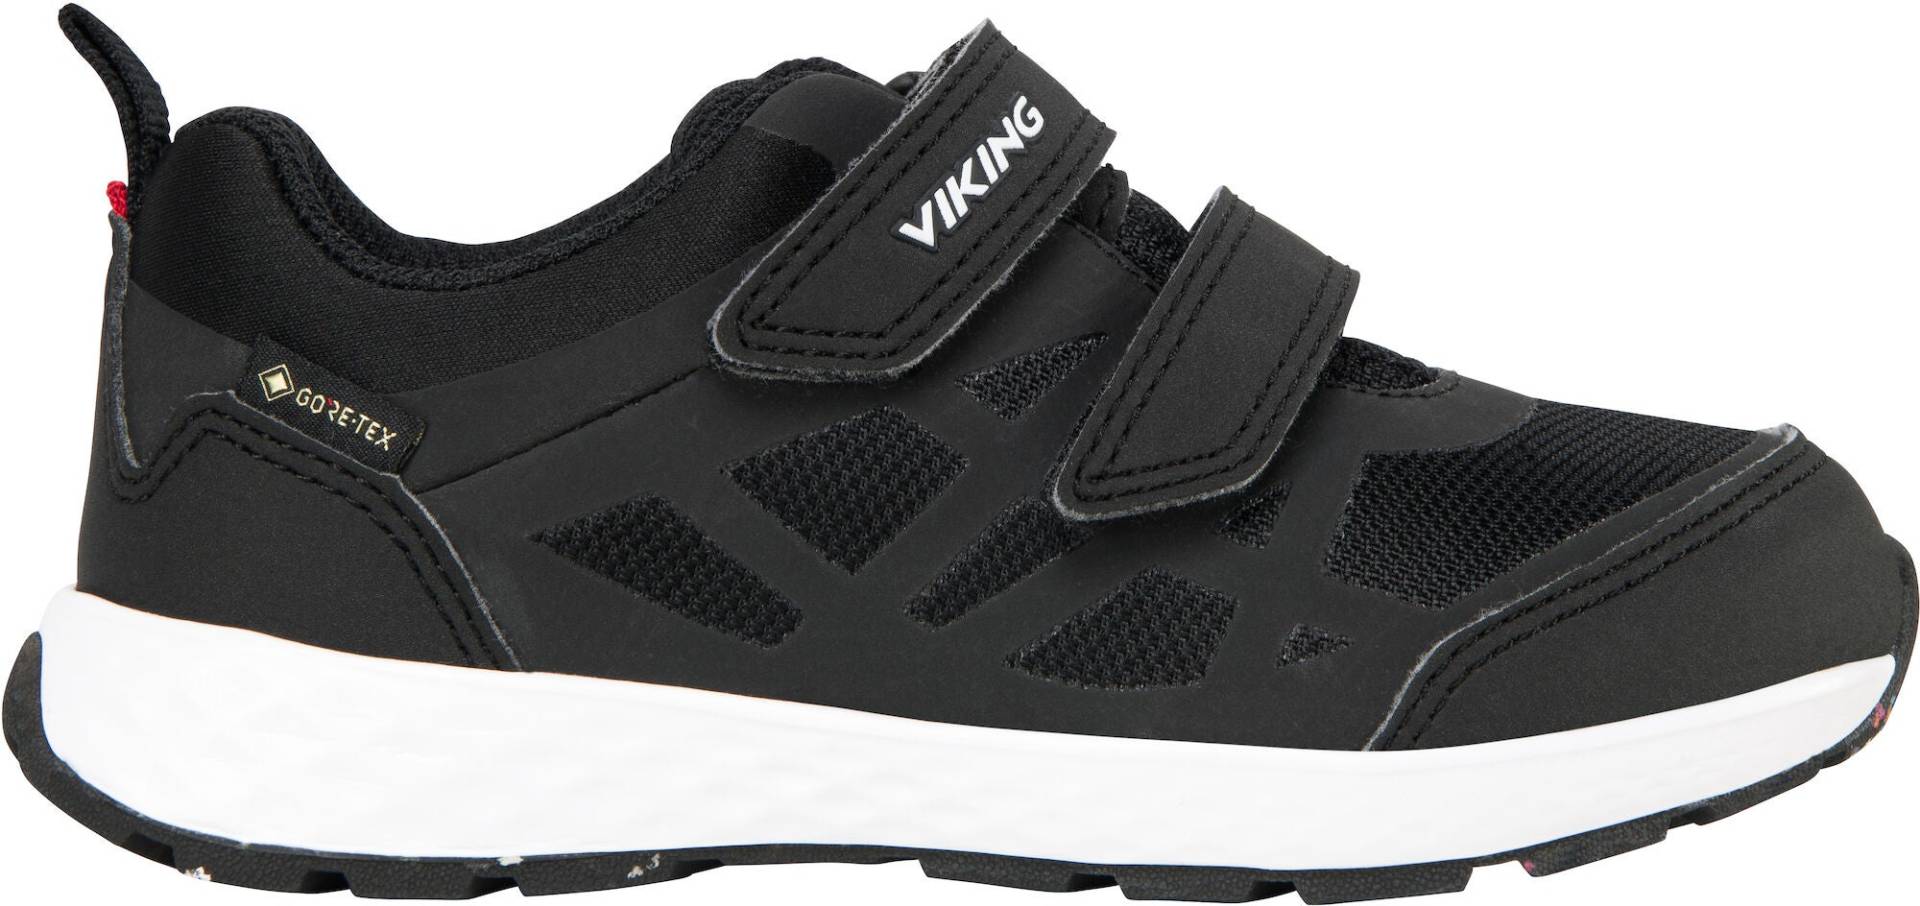 Viking Veme Reflex 2V GTX Kinder Sneakers, Black, 34, Kinderschuhe von Viking